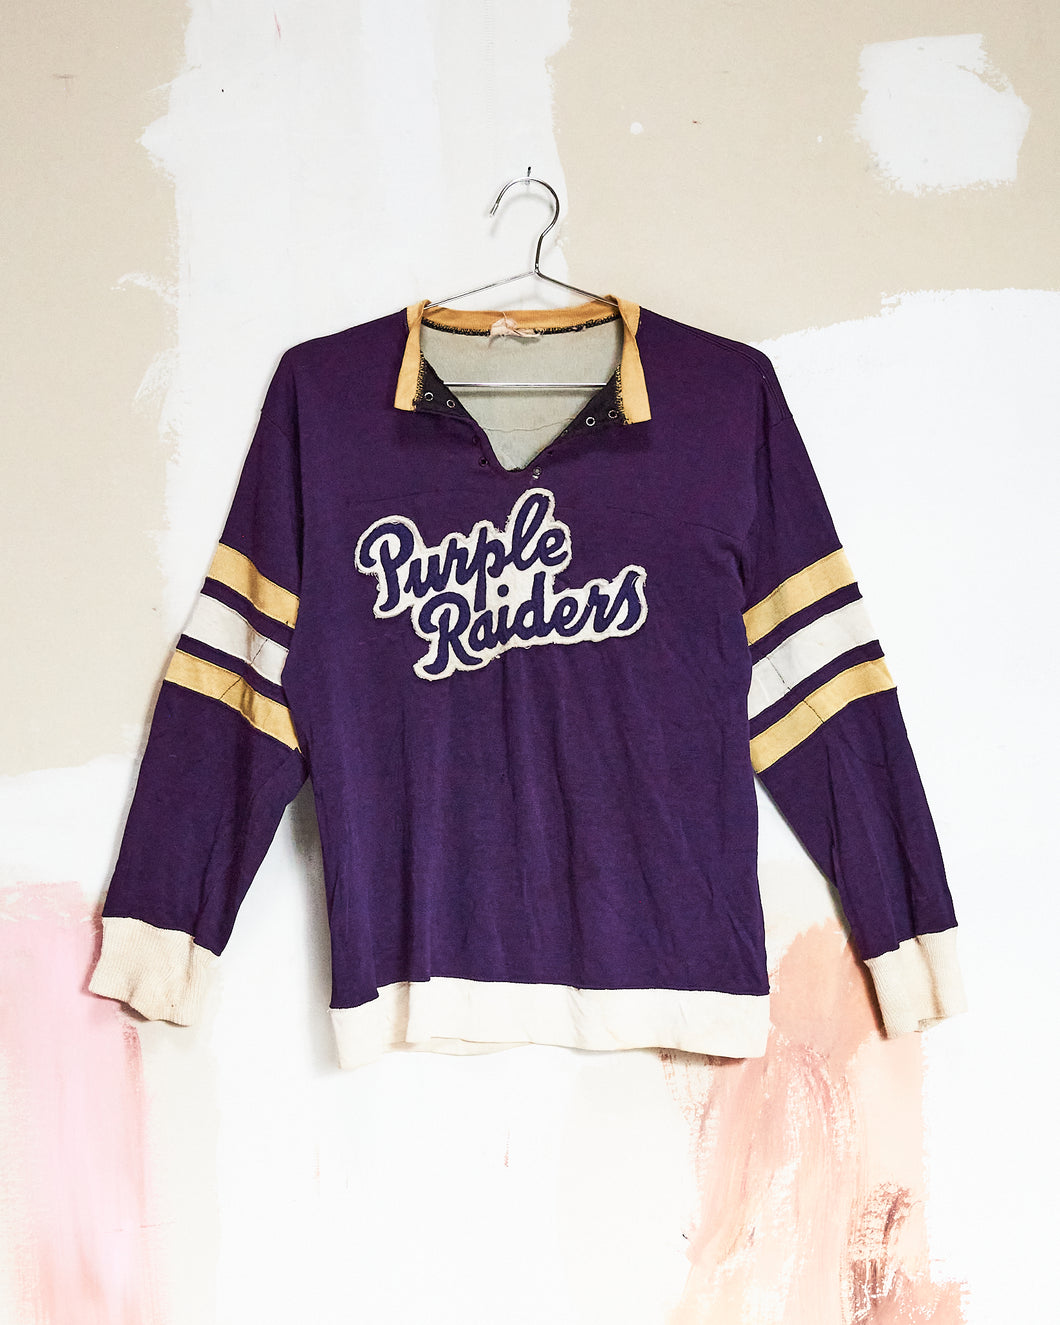 1940s/1950s Purple Raiders Jersey